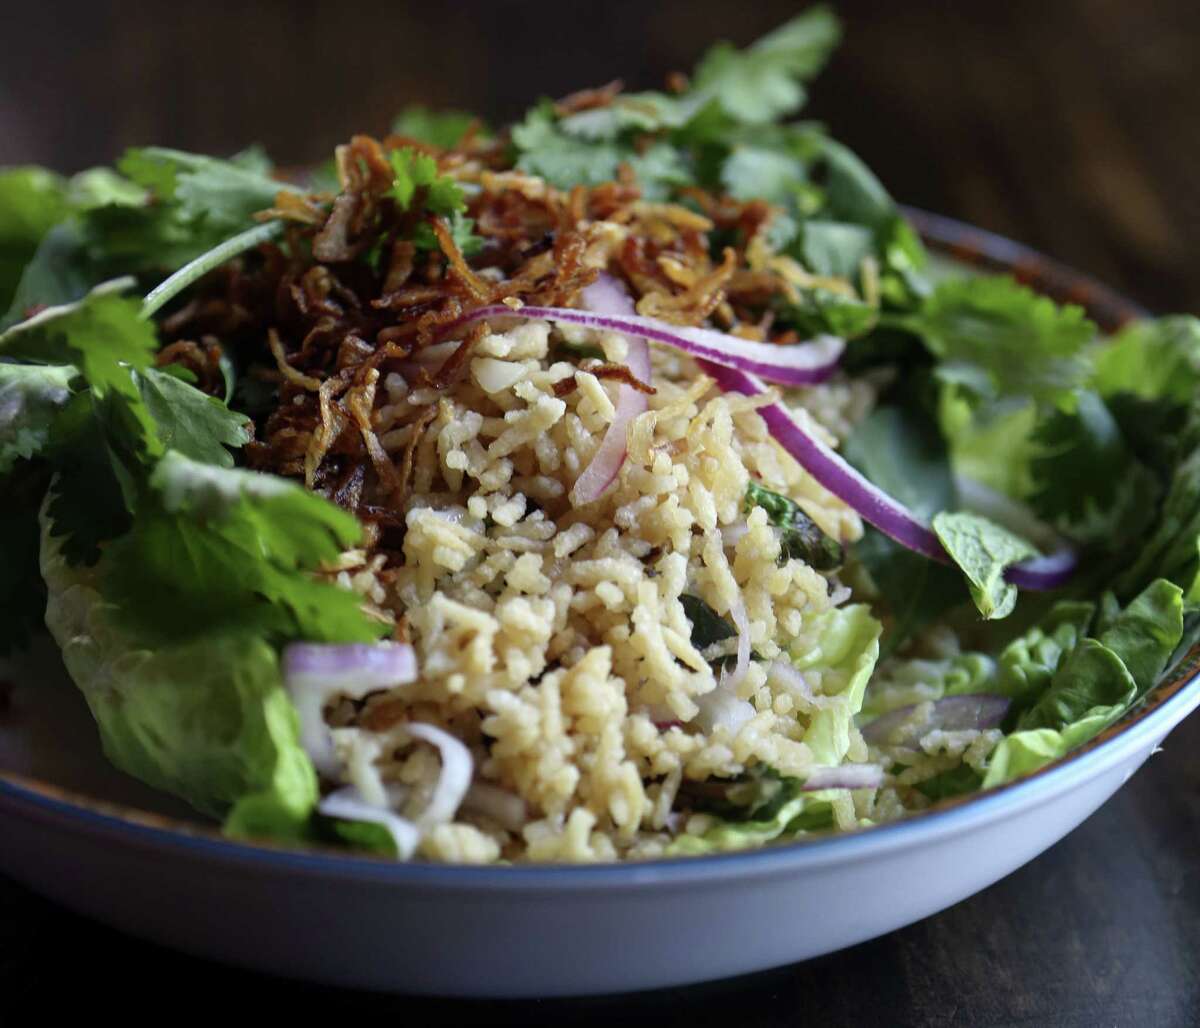 The Crispy Rice Salad at Umai Mi is a mainstay on the menu.